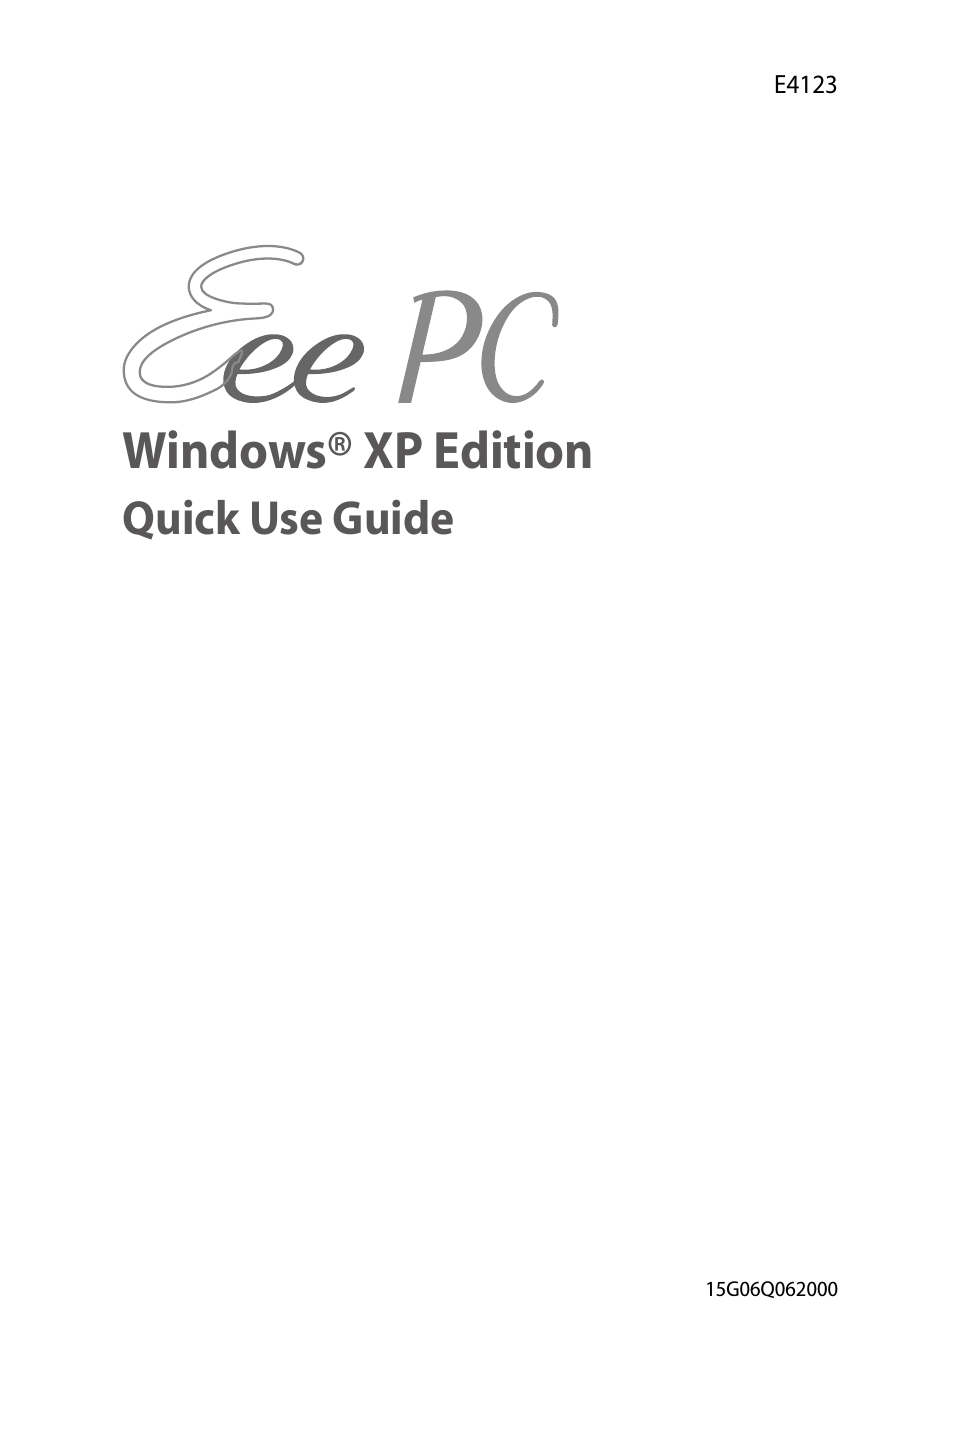 Eee PC 900A/XP